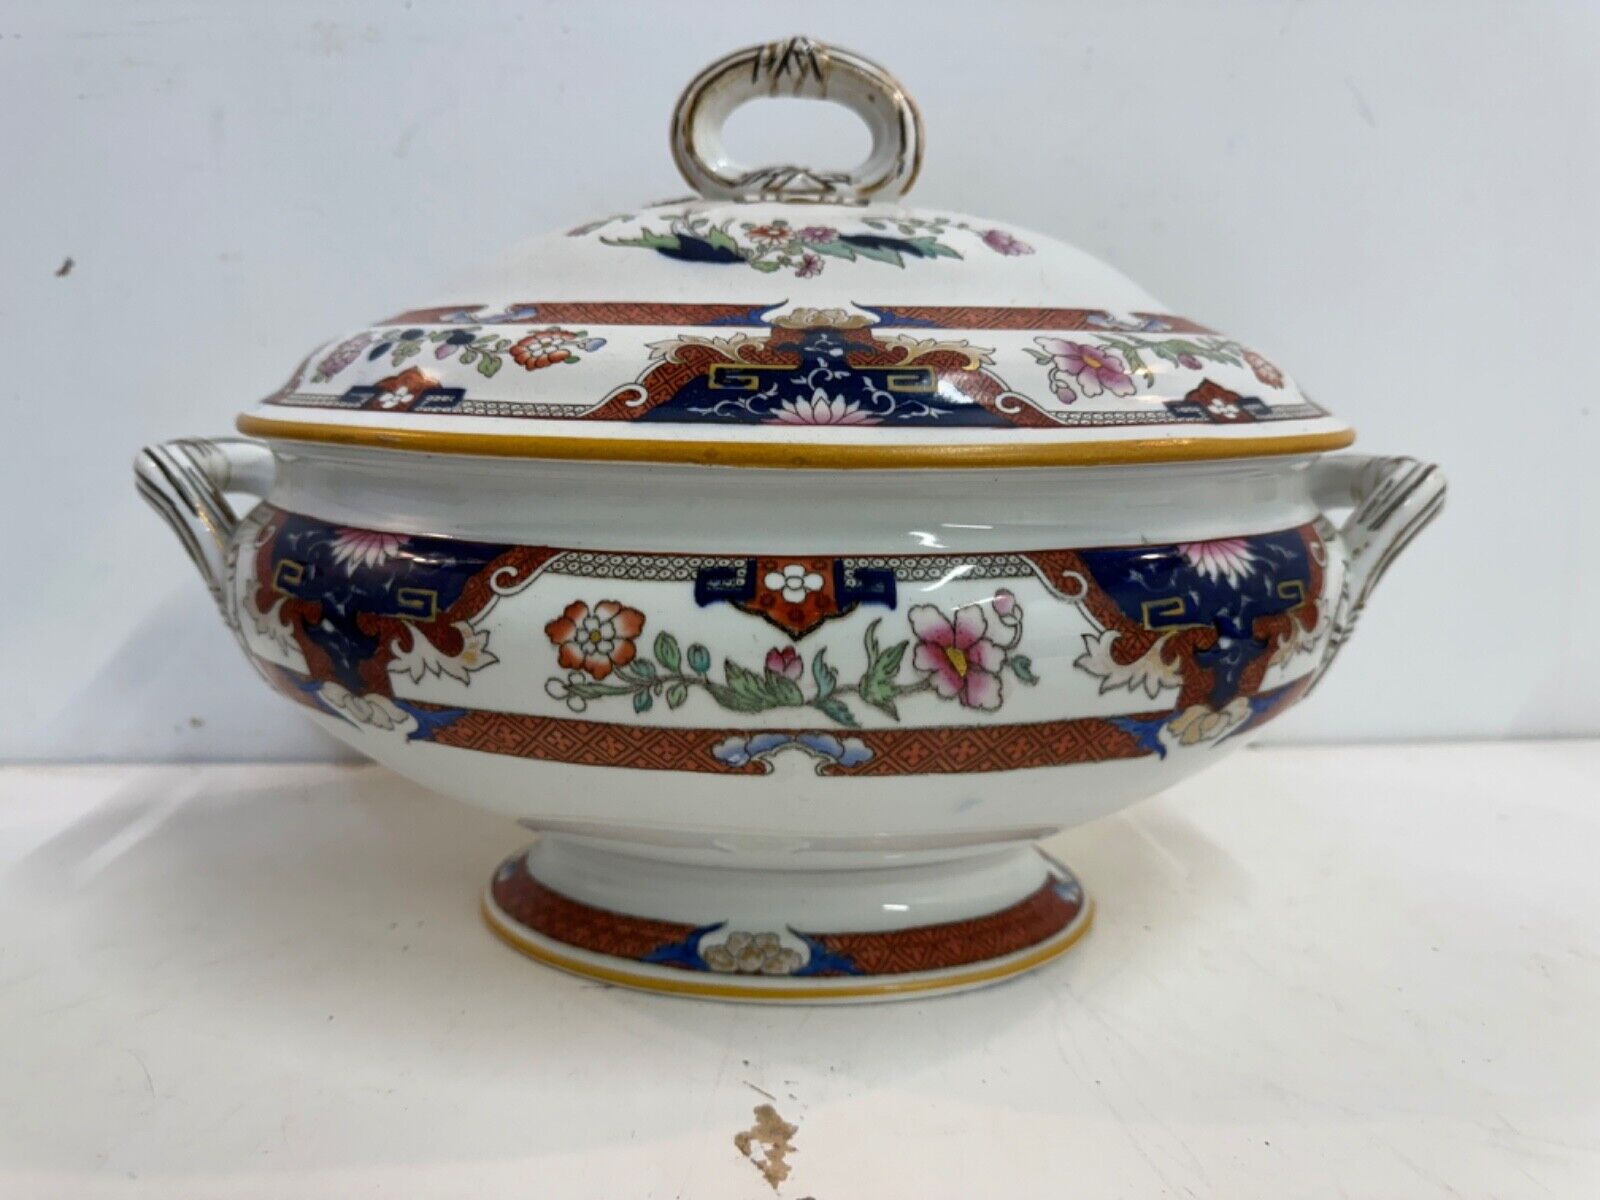 Vintage Minton Porcelain “Shah Japan” Imari Style Tureen Dish